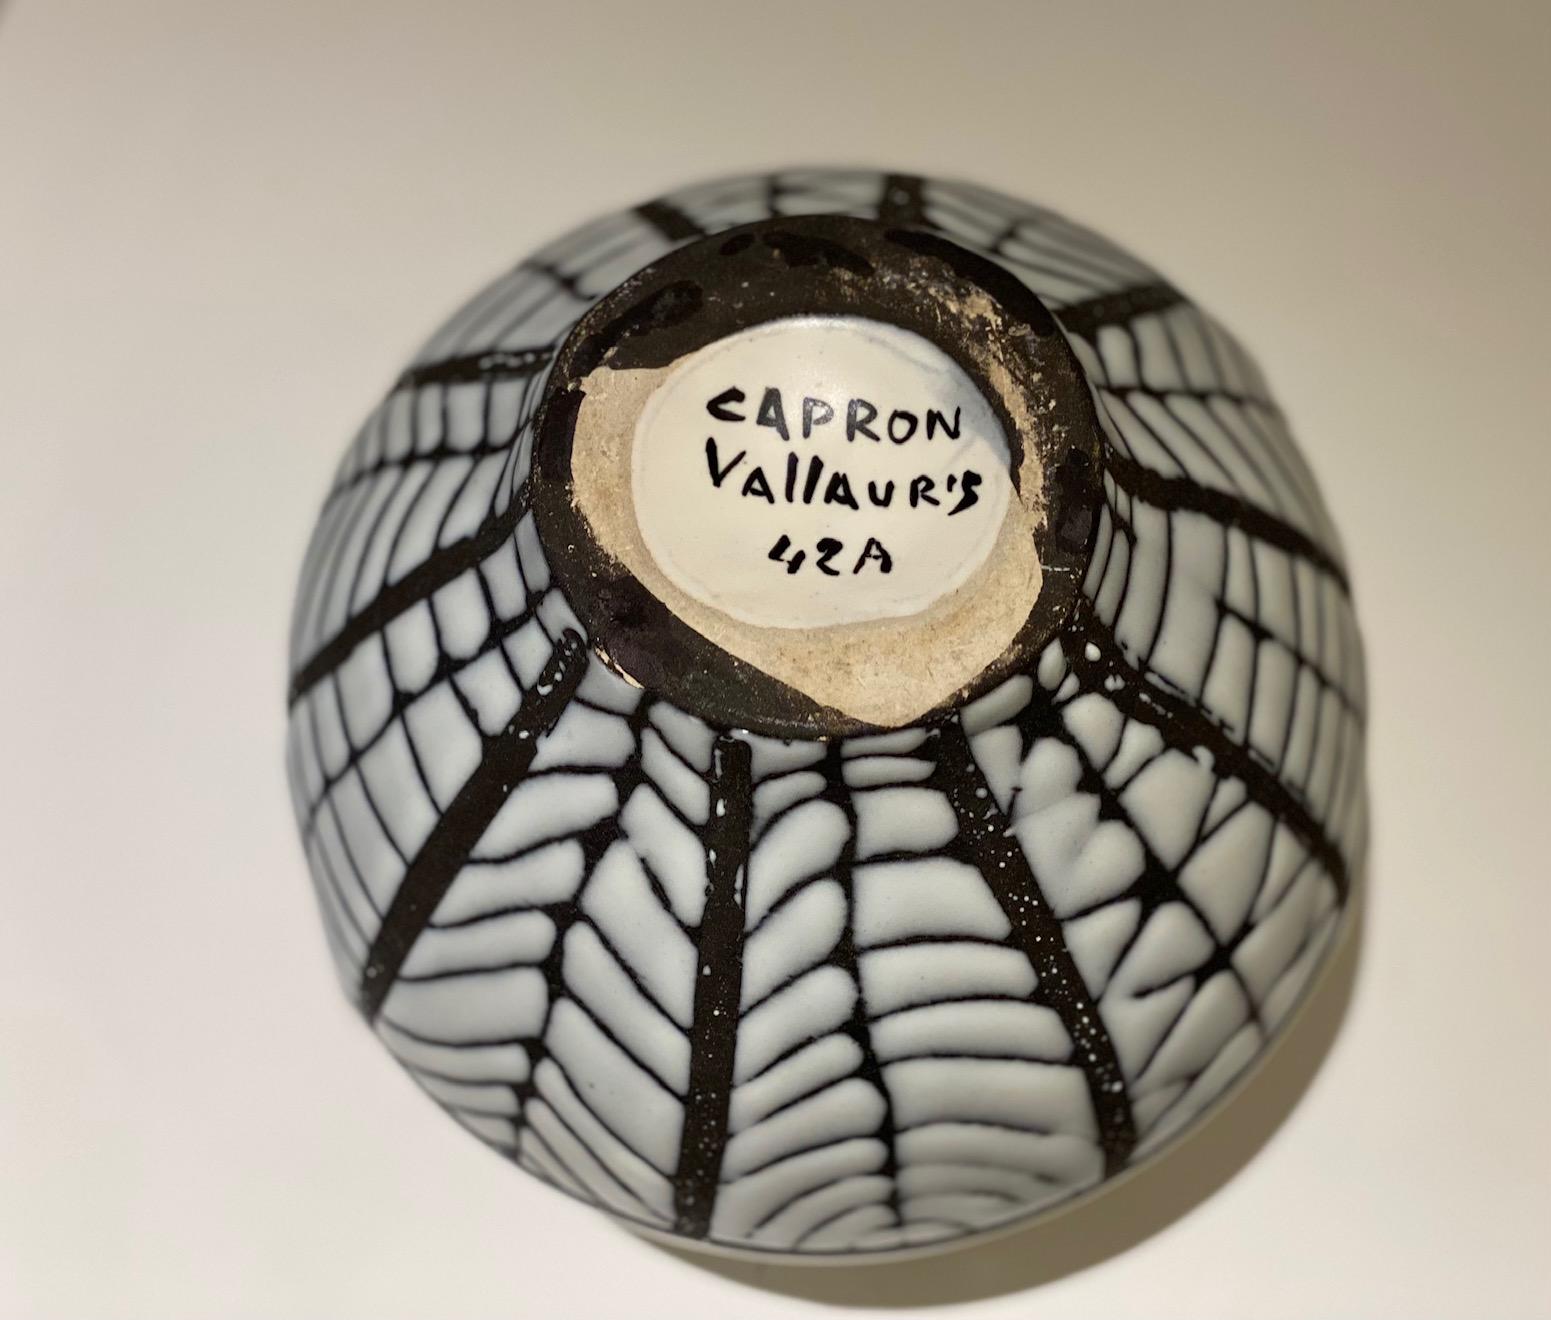 Mid-20th Century Ceramic Vase Signed by Roger Capron, Vallauris, 1956